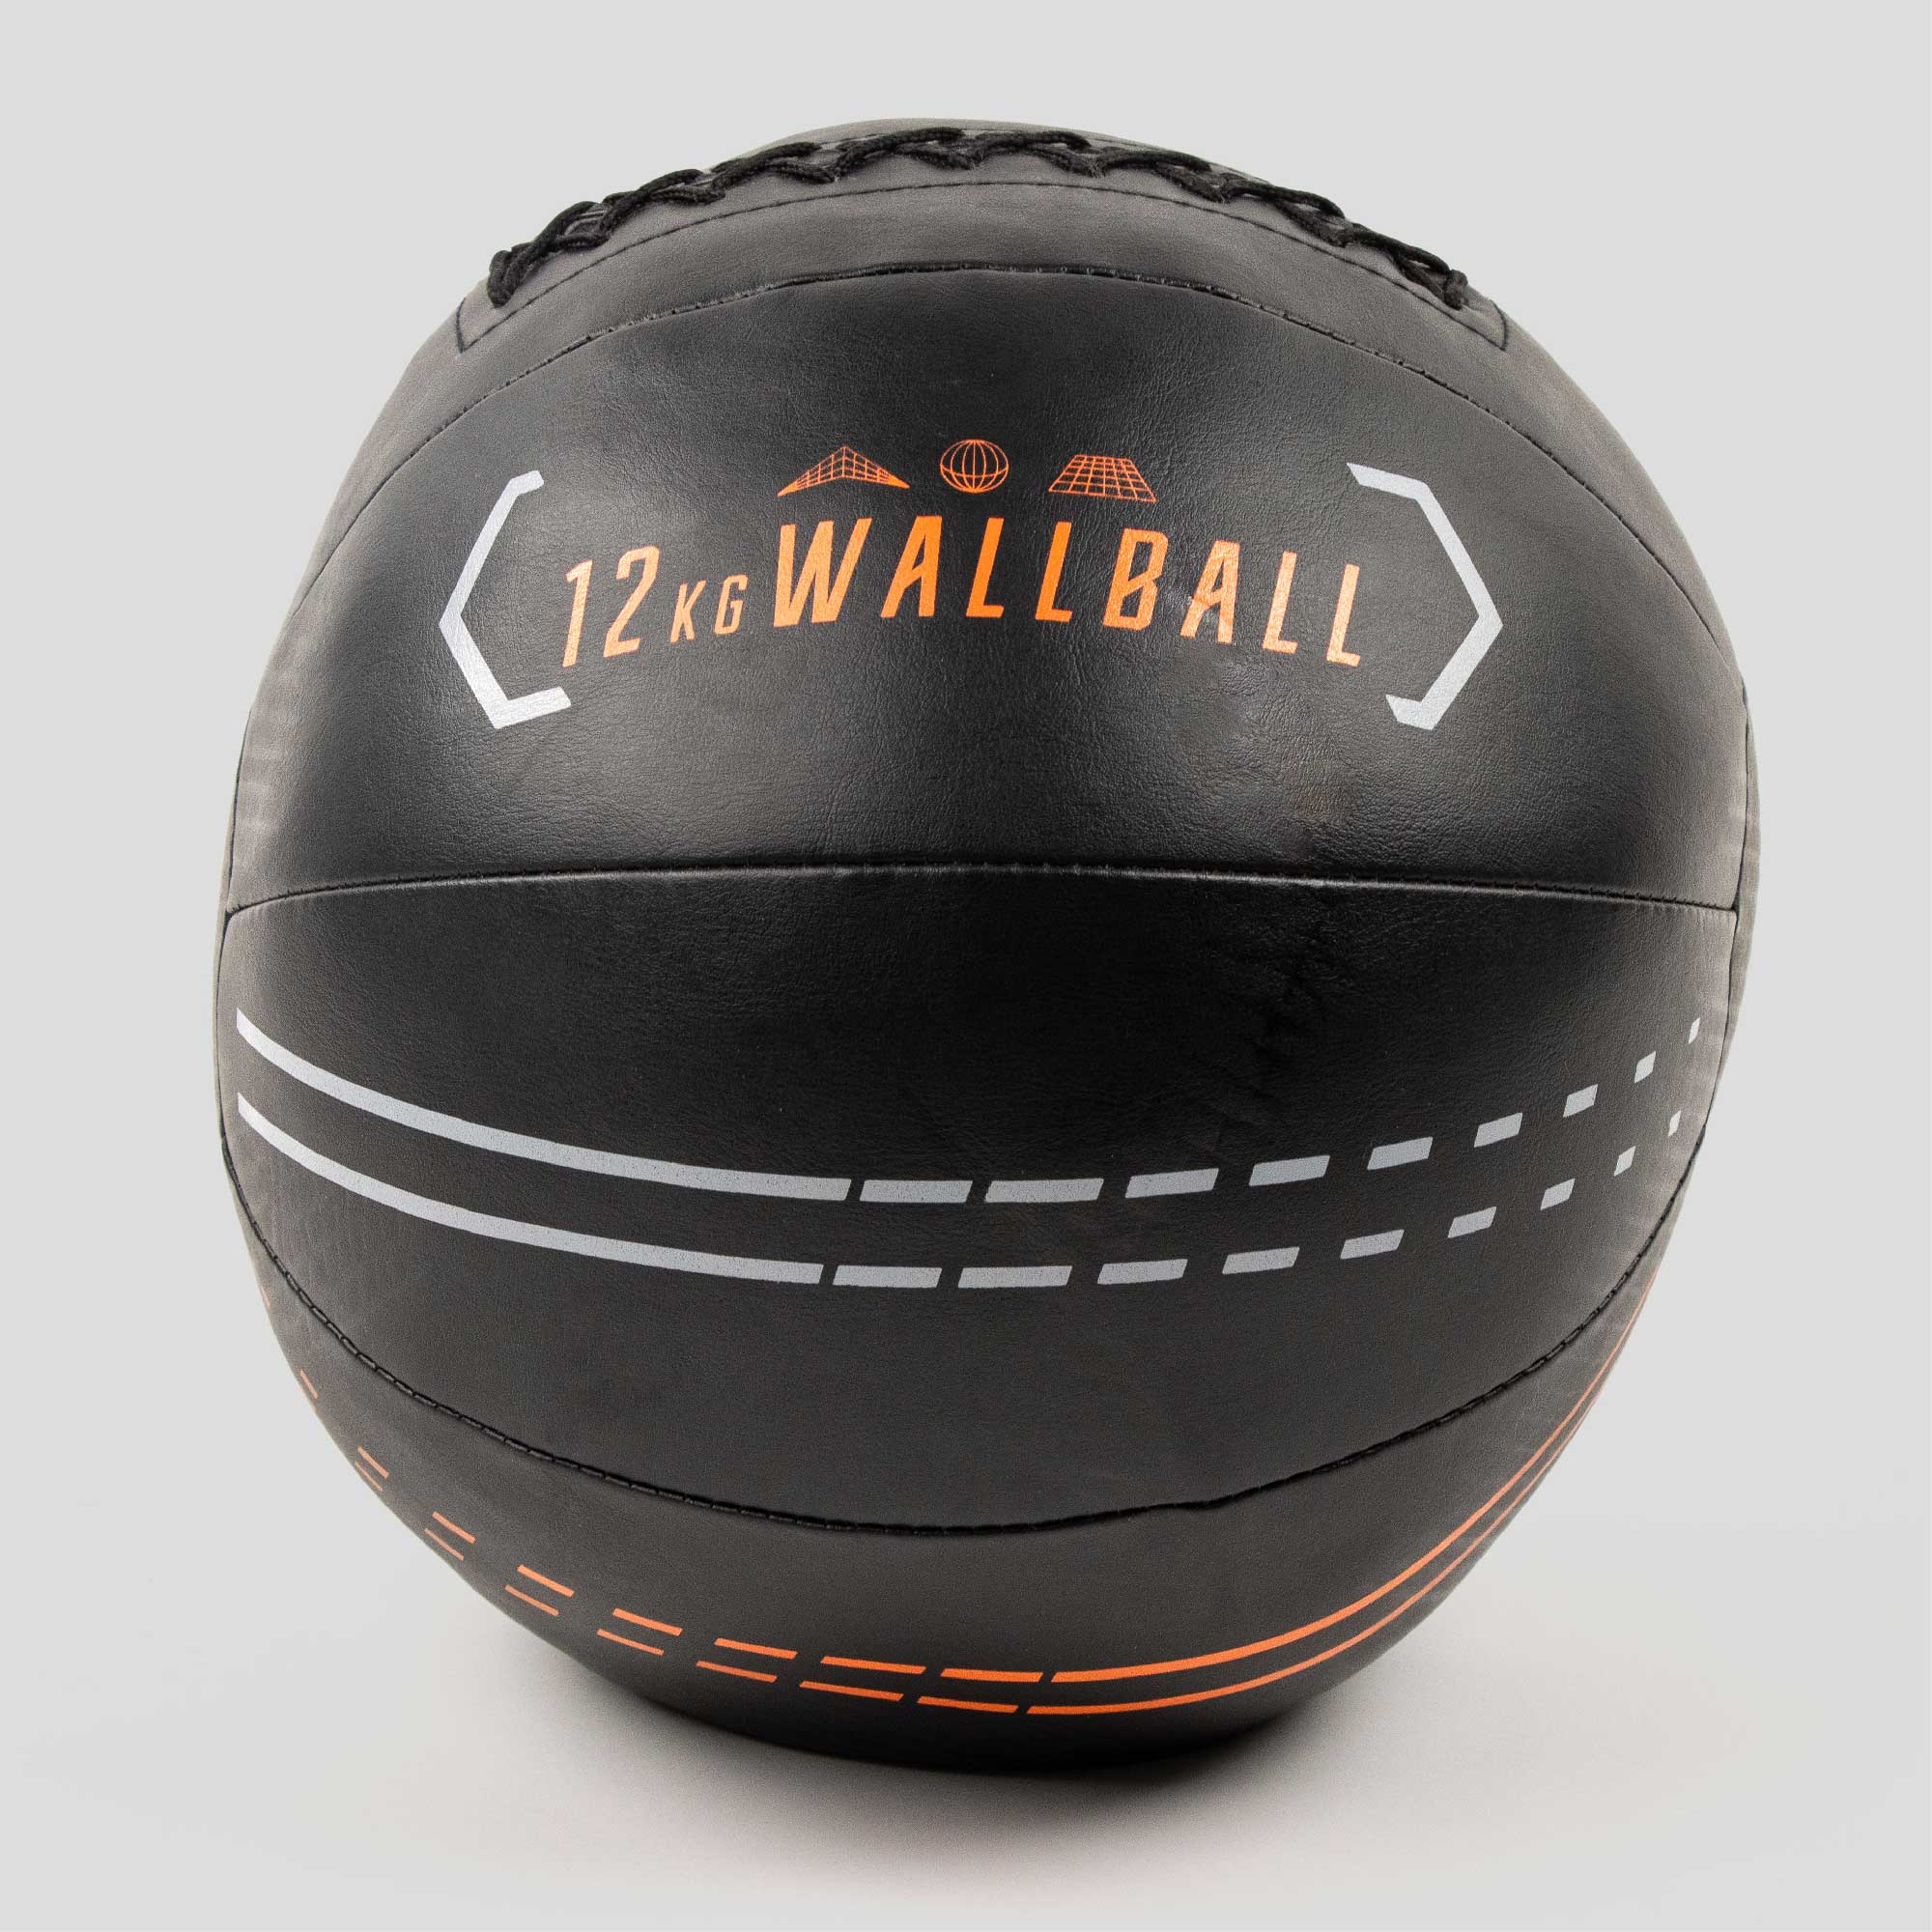 Wall Ball - 12kg